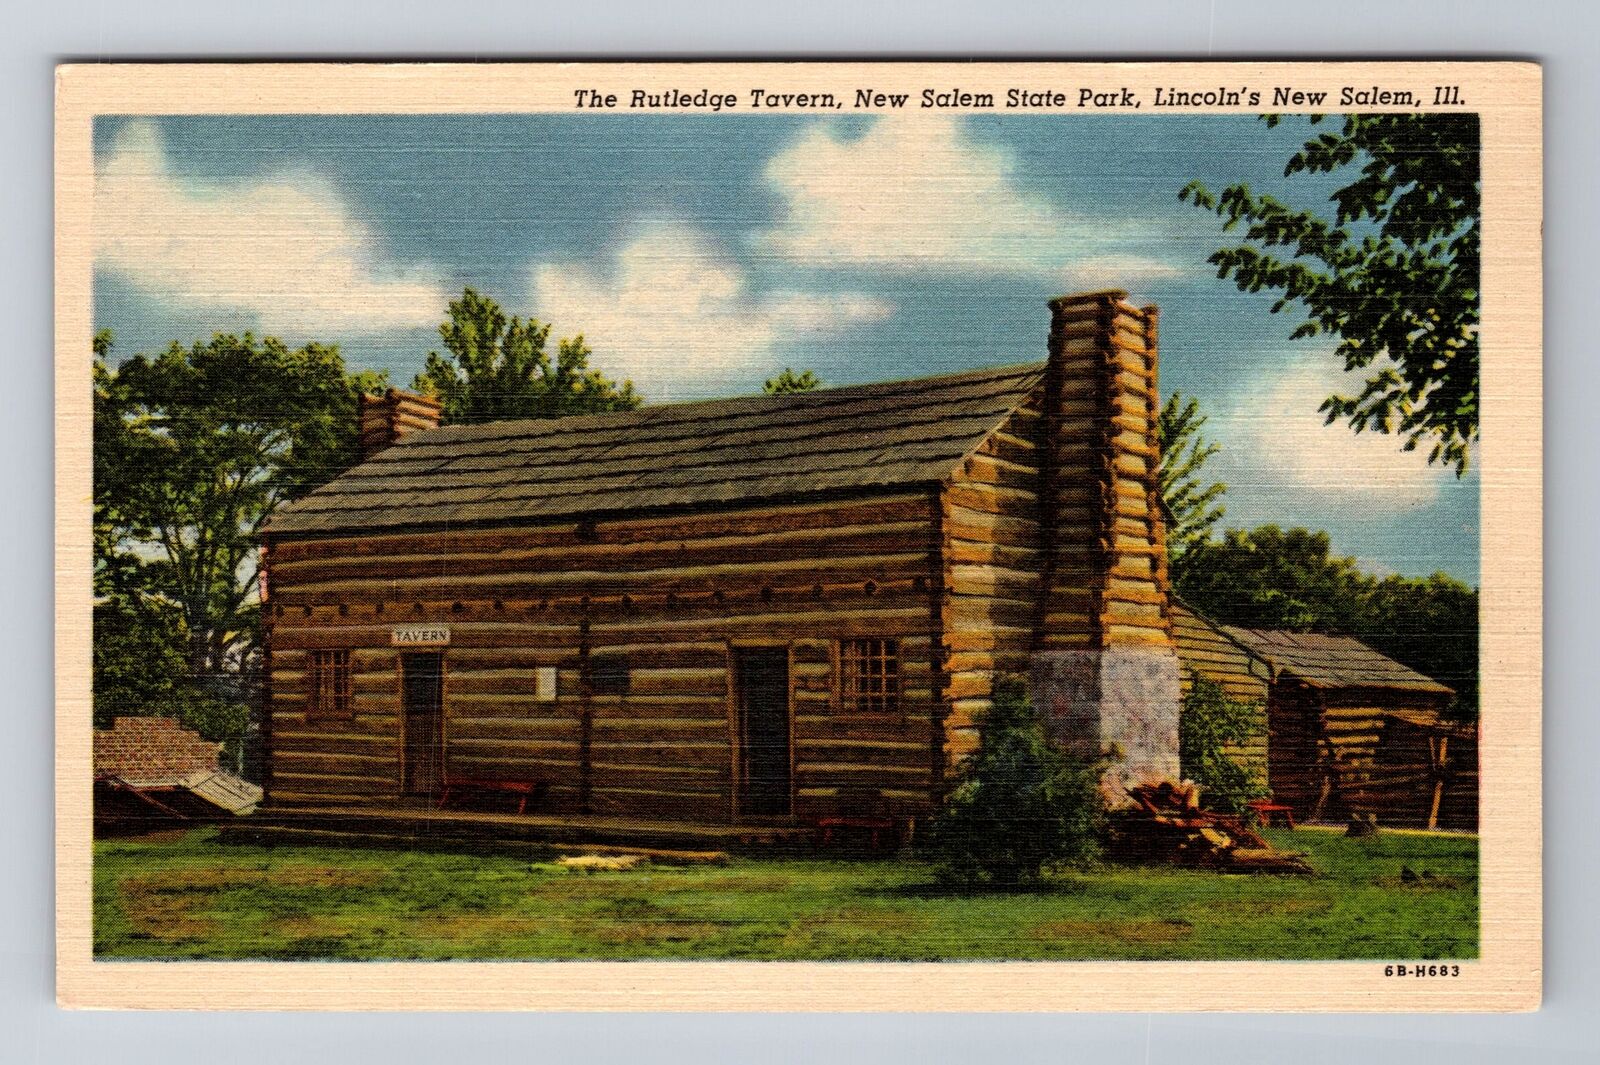 Lincoln's New Salem IL-Illinois, Rutledge Tavern, Antique, Vintage Postcard